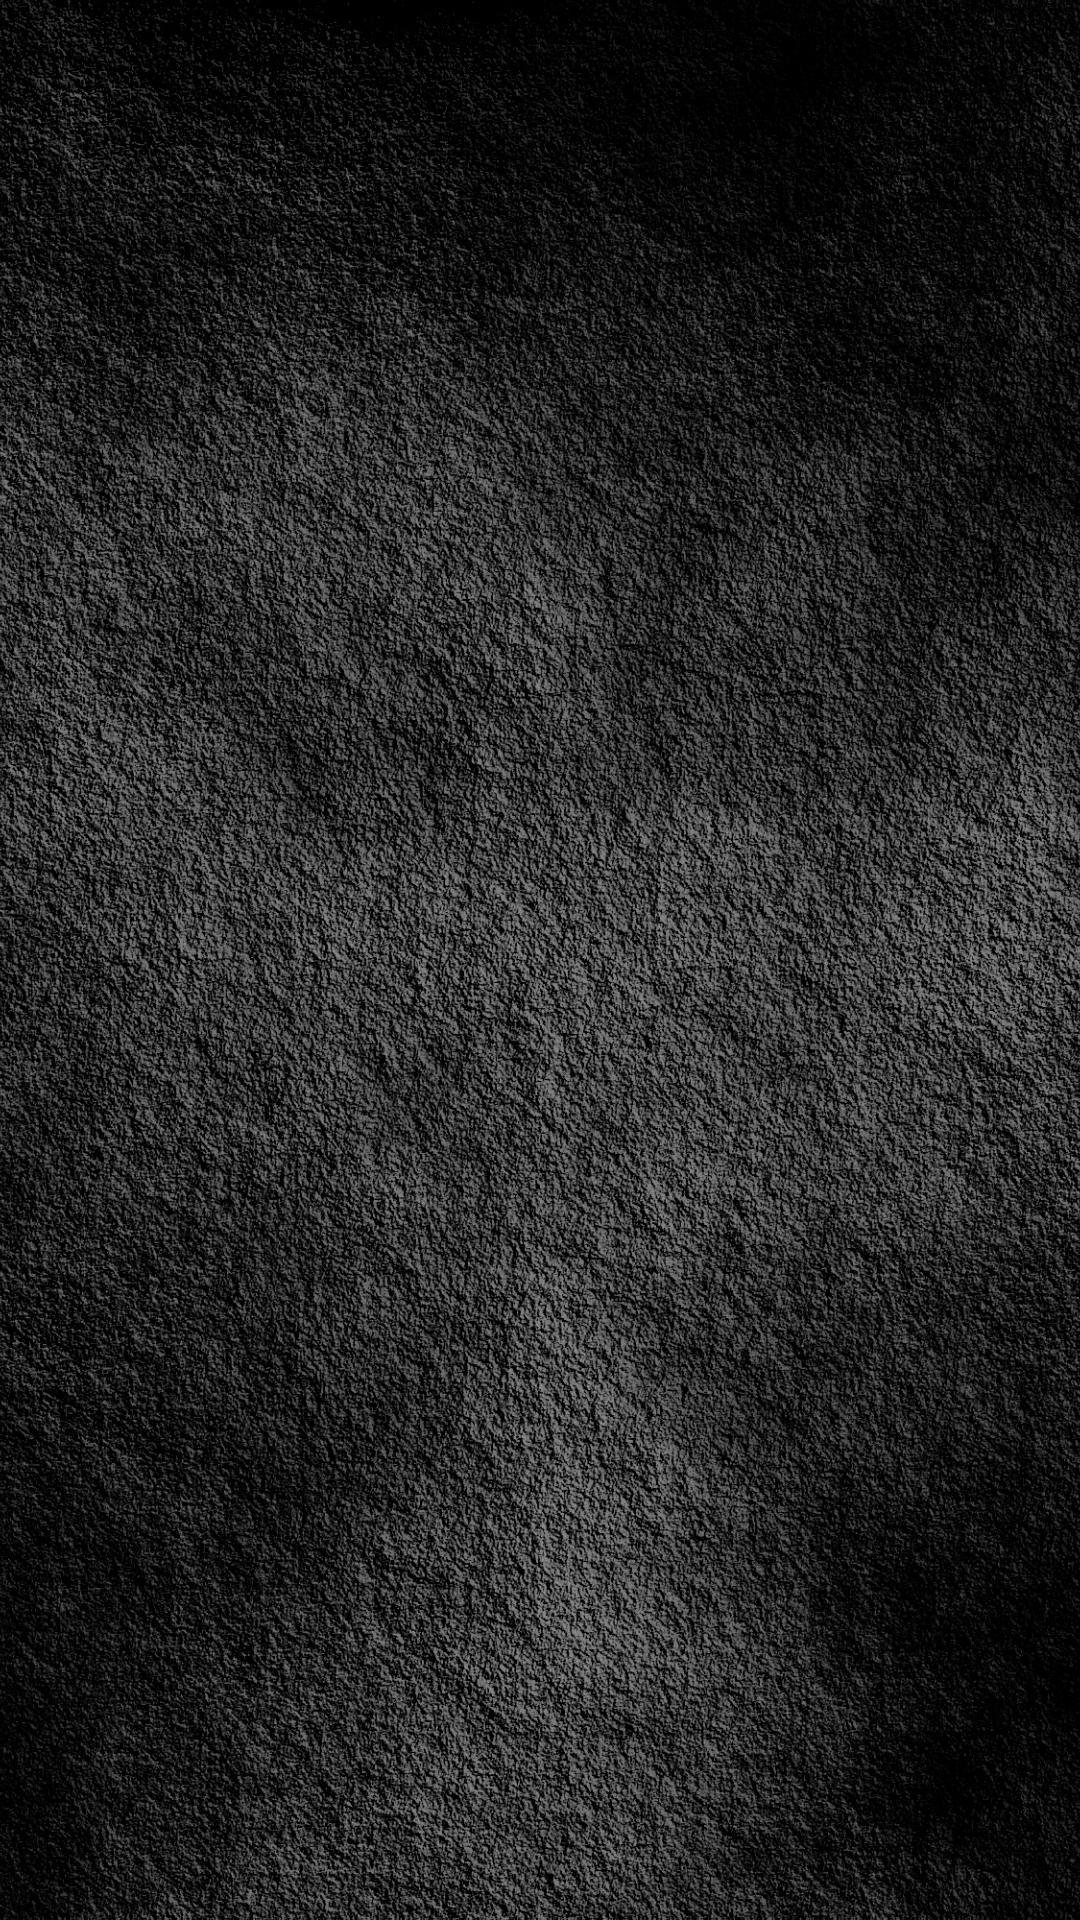 Oneplus One Black Wallpaper